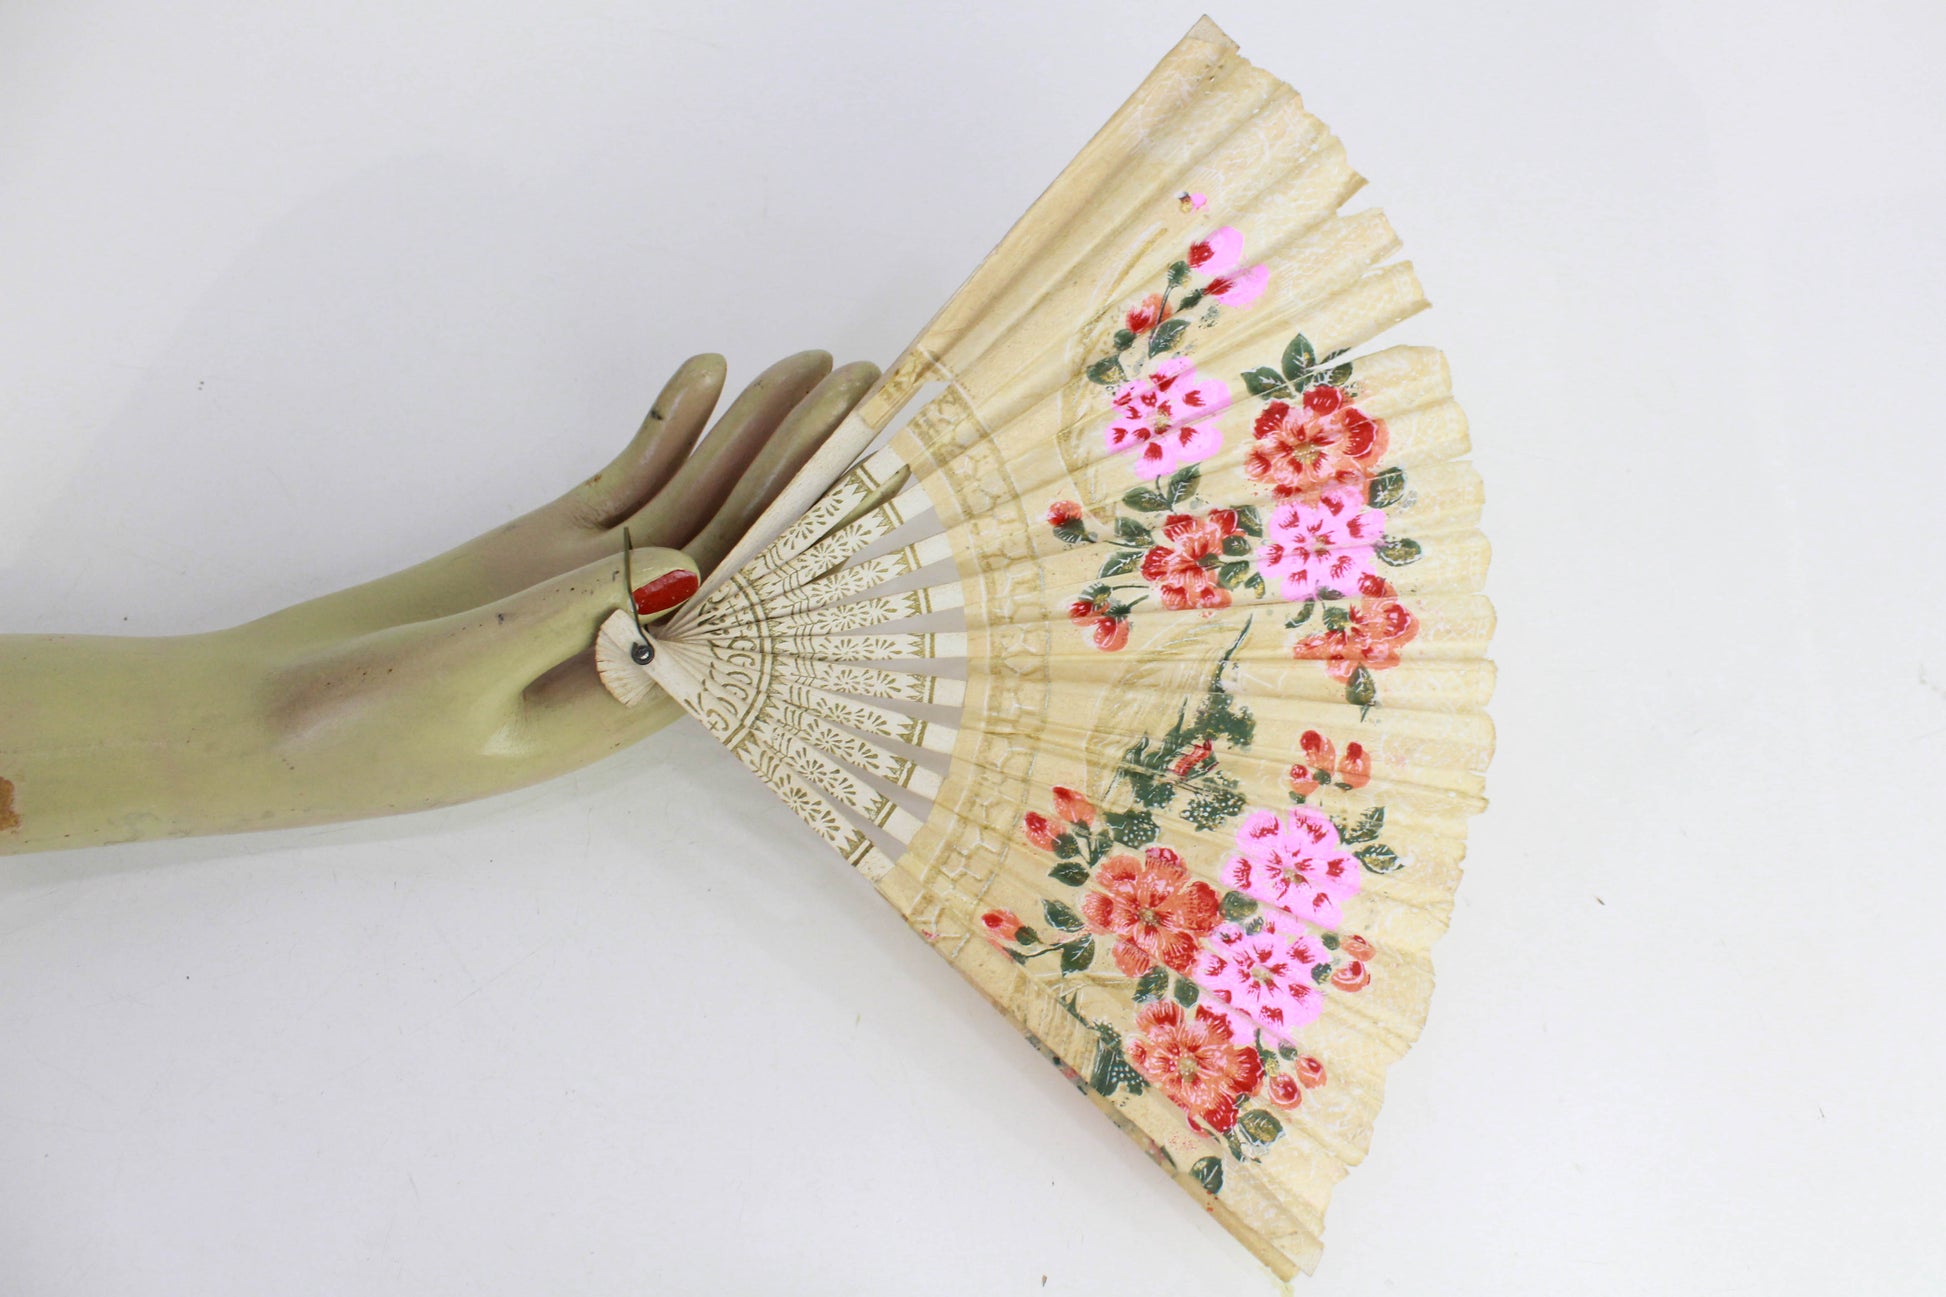 Antique Art Deco Hand Fan, Painted Floral Paper Fan 1920s Cherry Blossoms Painted Wood Frame, Vanity Decor